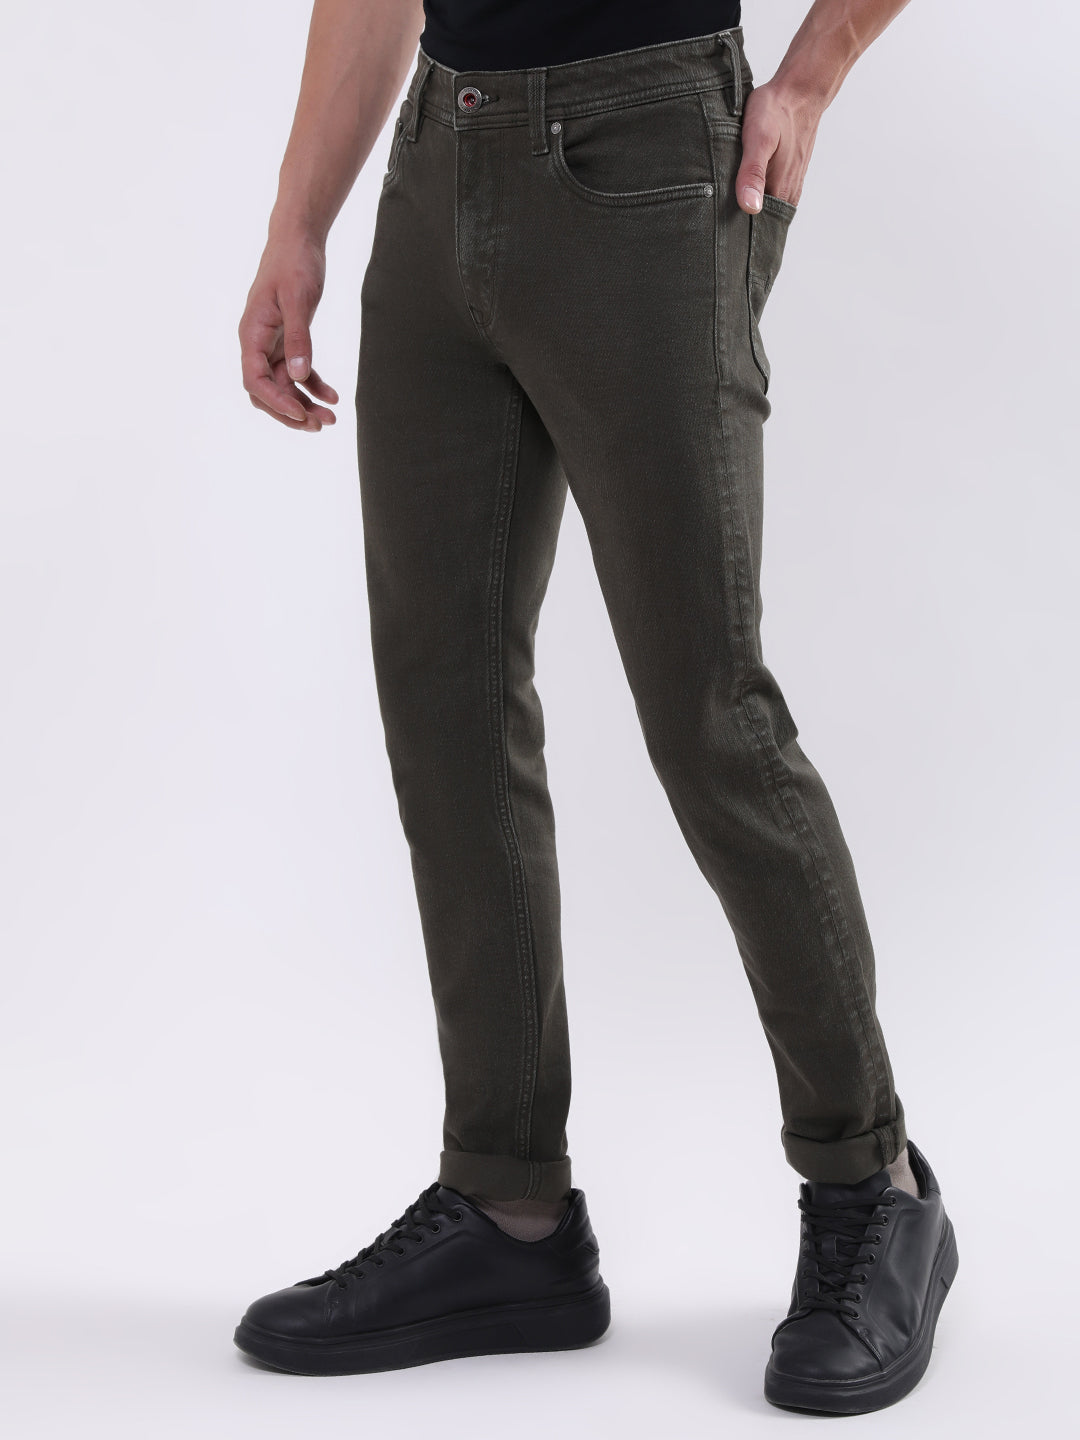 Ultrasoft Slim Yonk Fit Olive Green Jeans - Jeunet